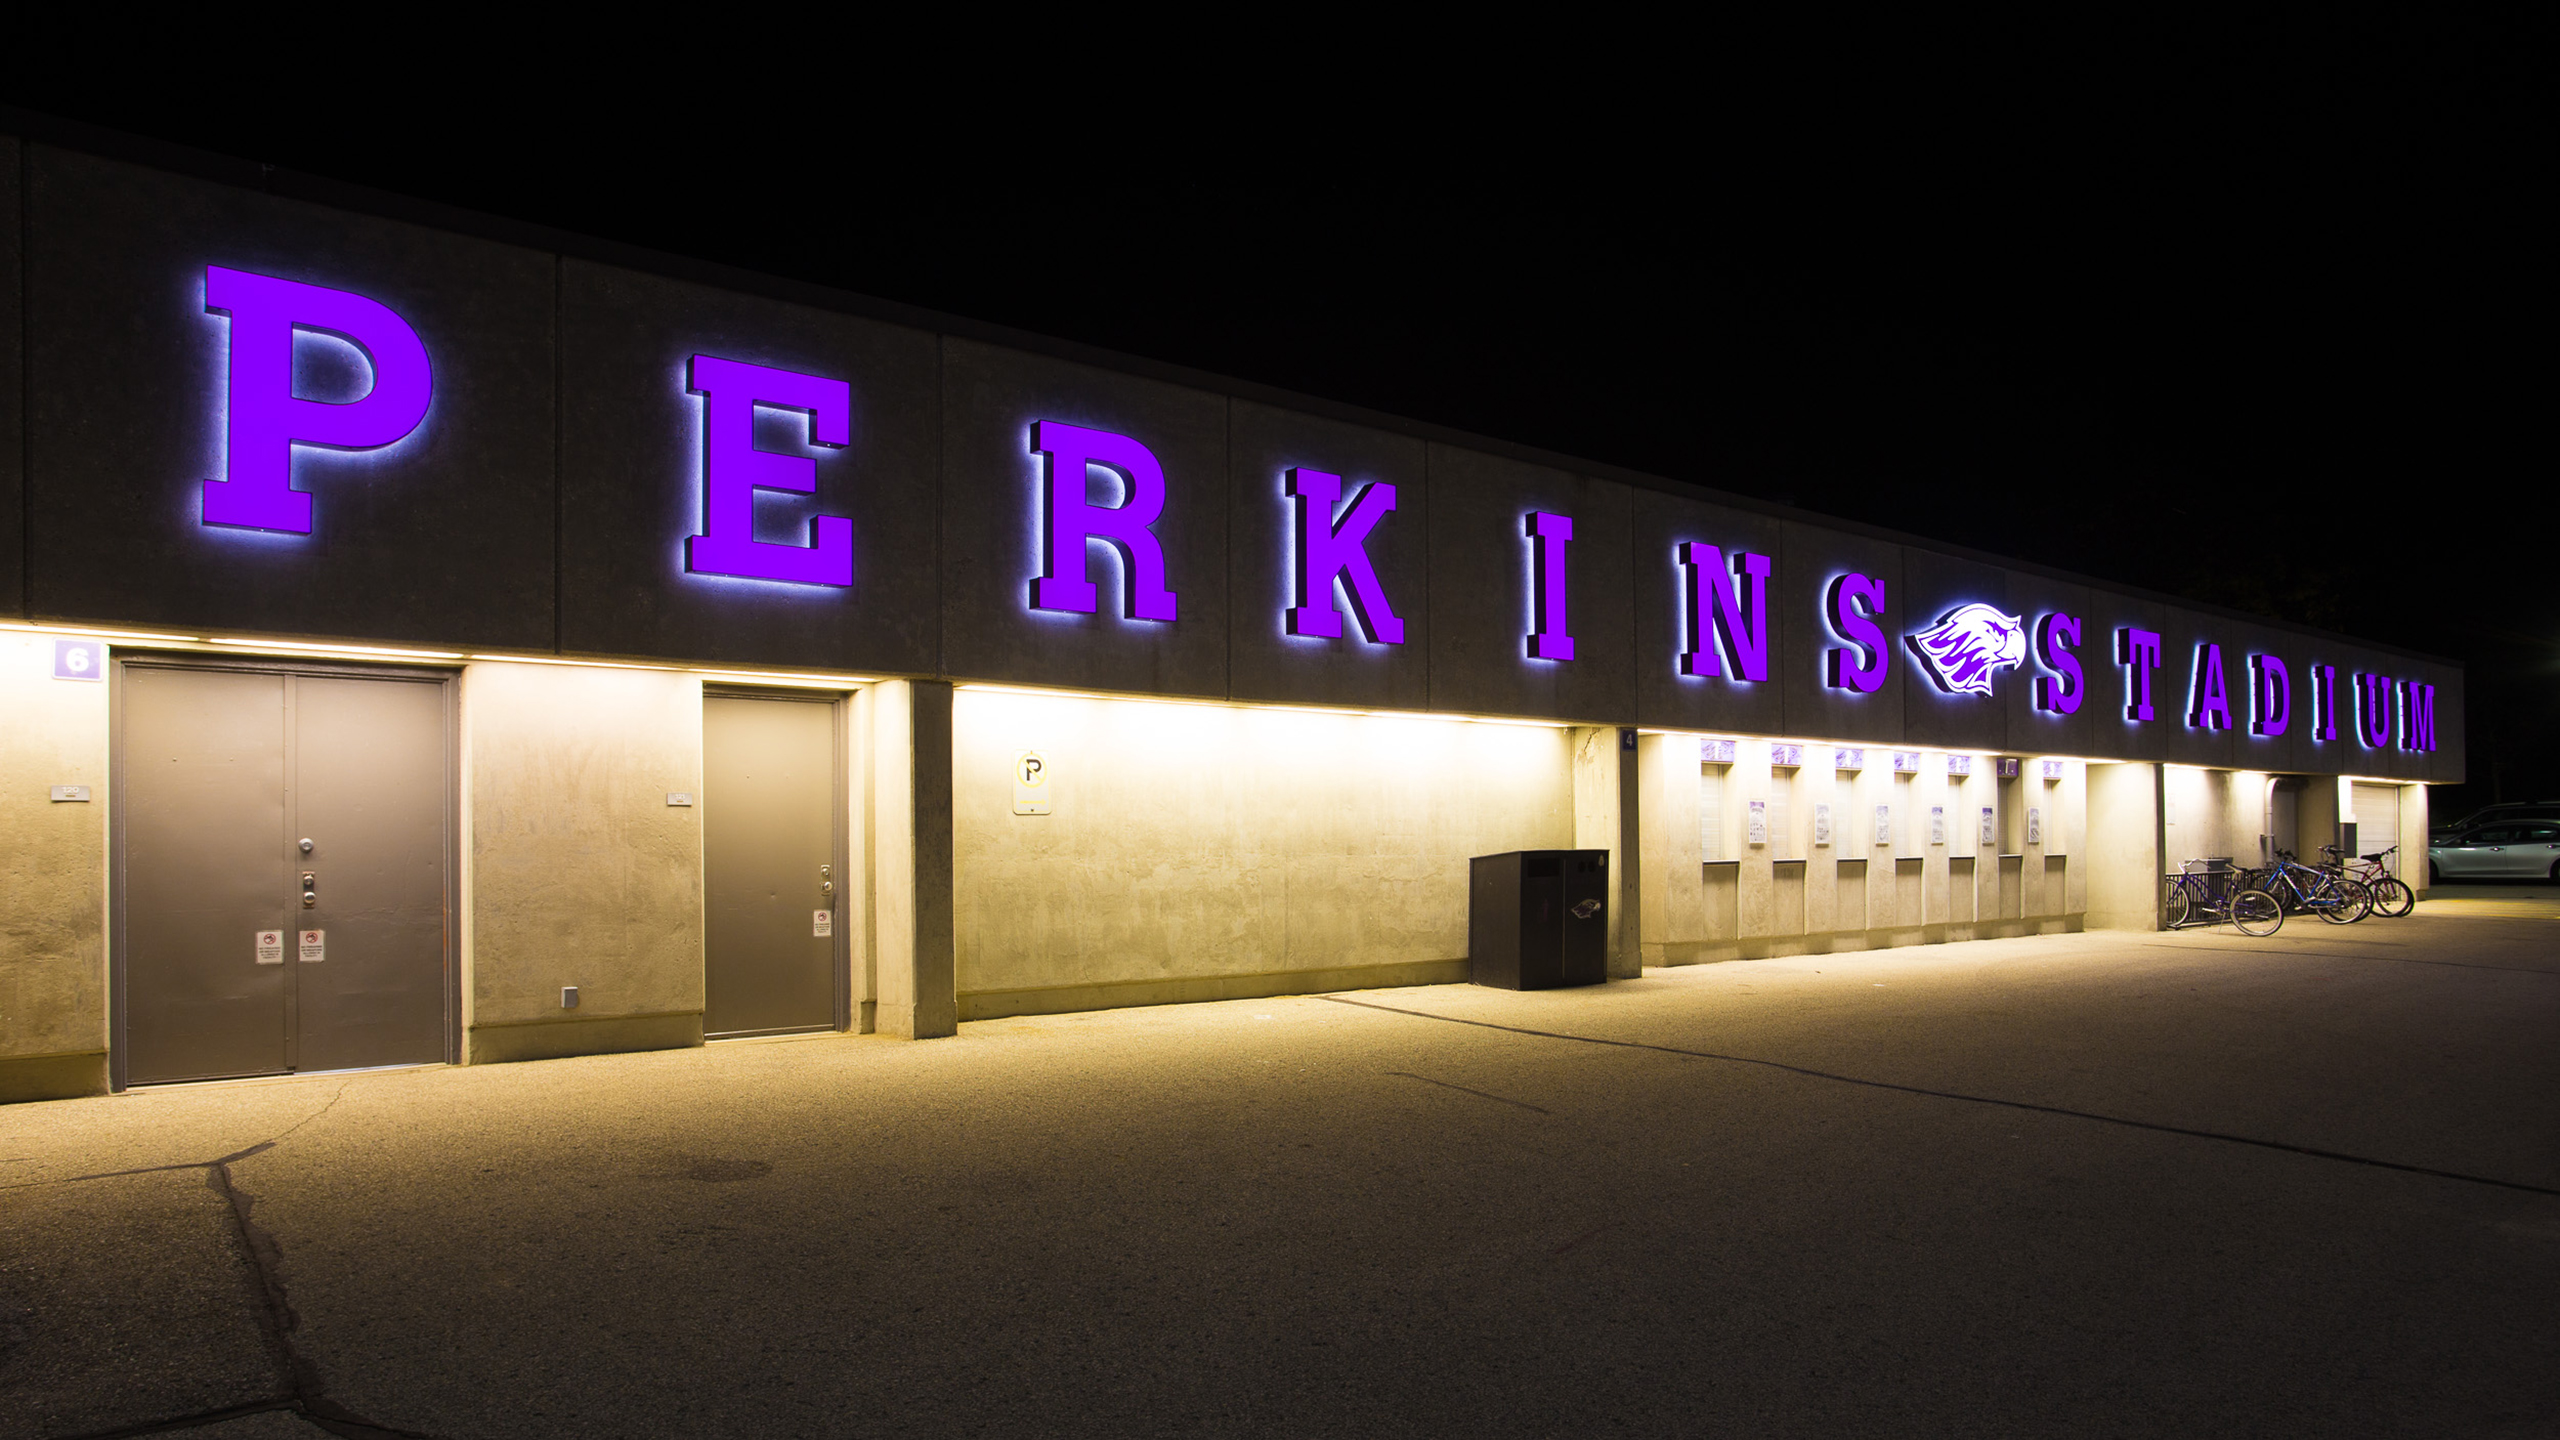 UW-Whitewater Perkins Stadium Lit Letters Exterior Branding